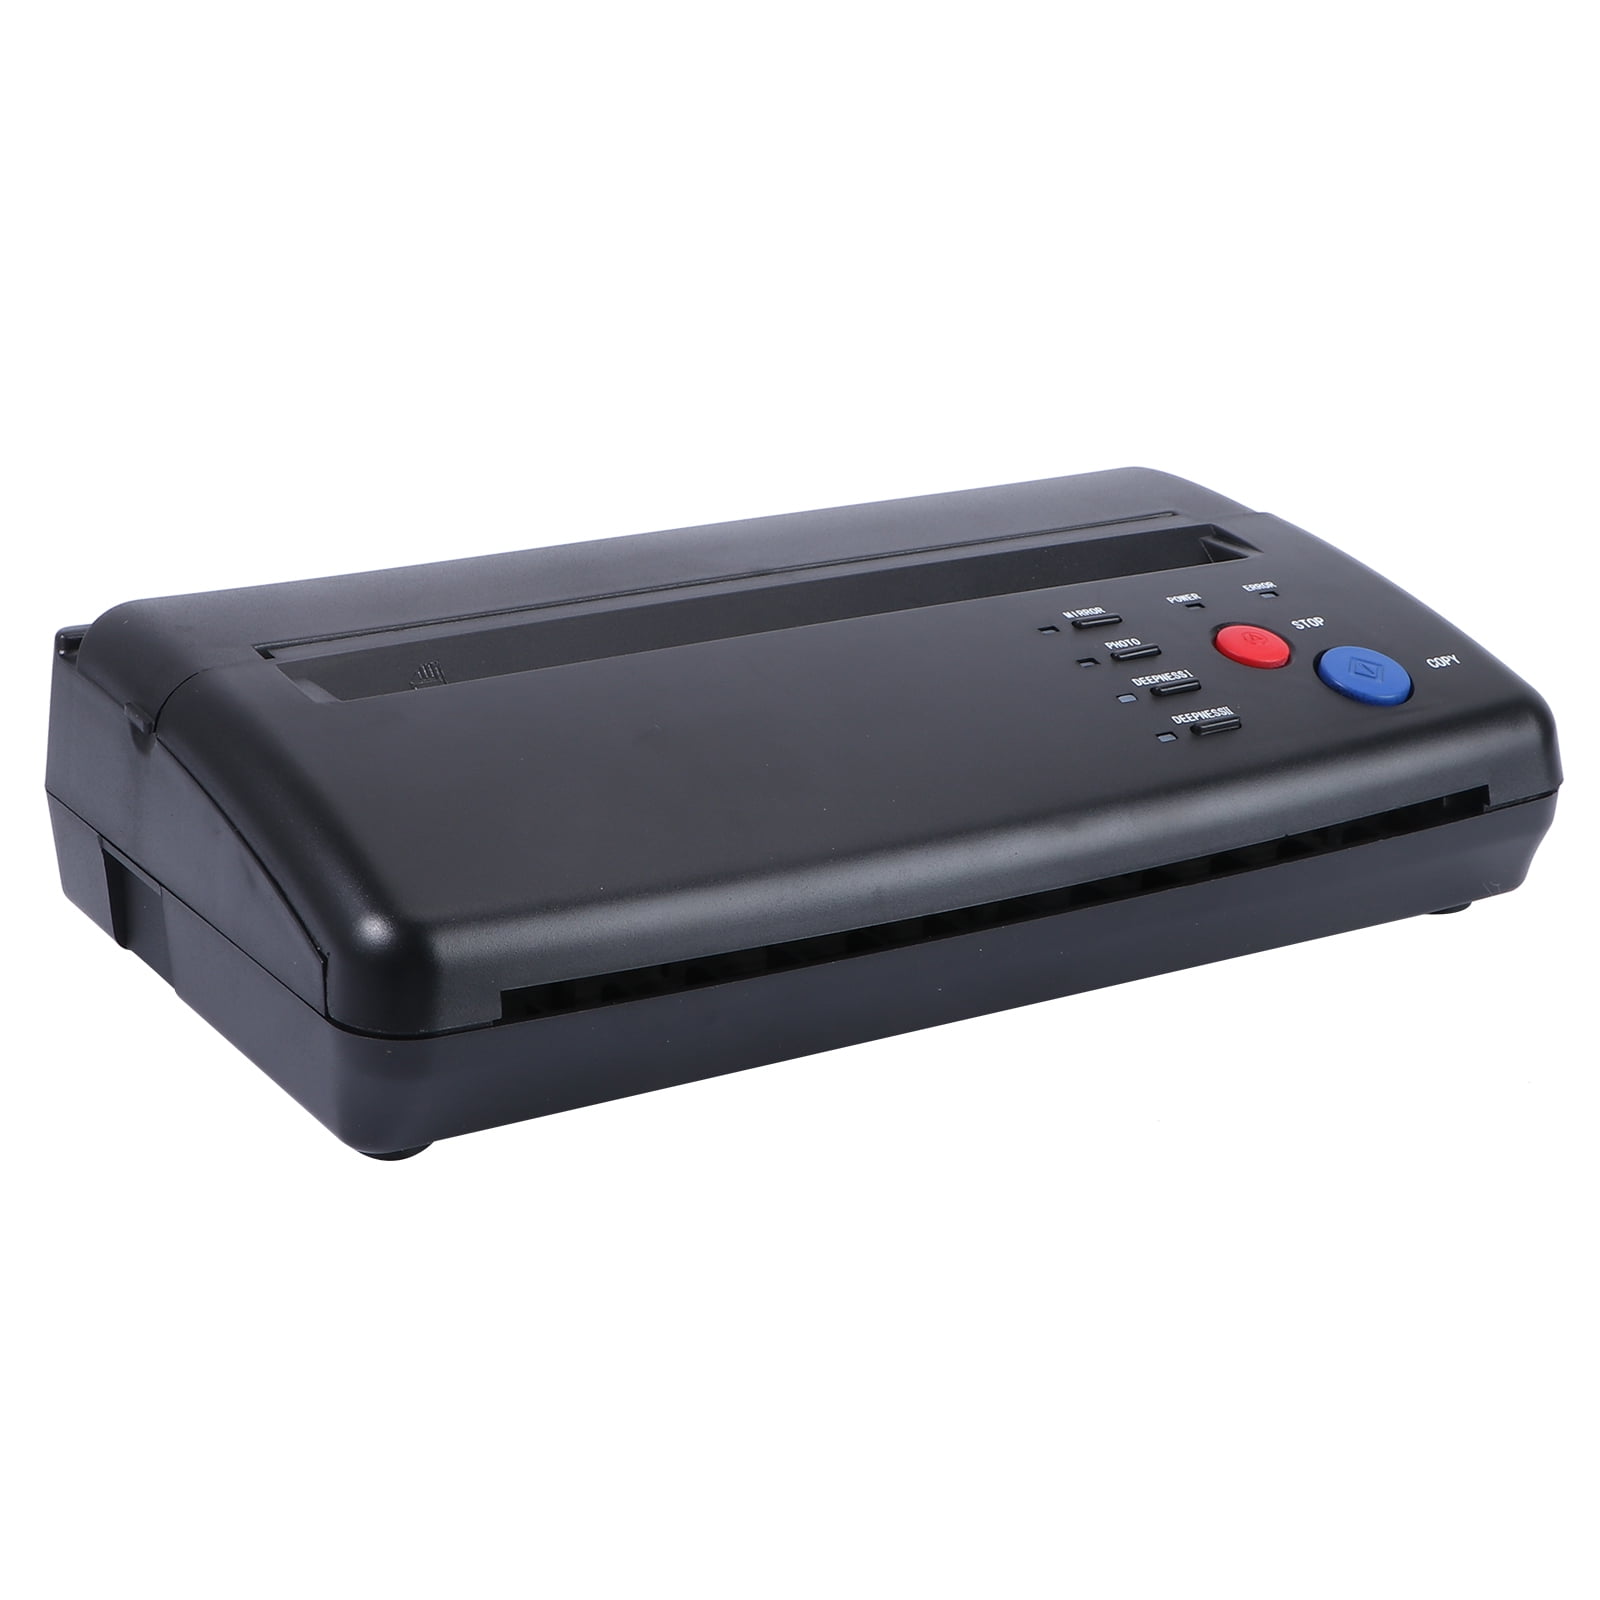 Pro Black Tattoo Transfer Copier Printer Machine Thermal Copier Printer Black 